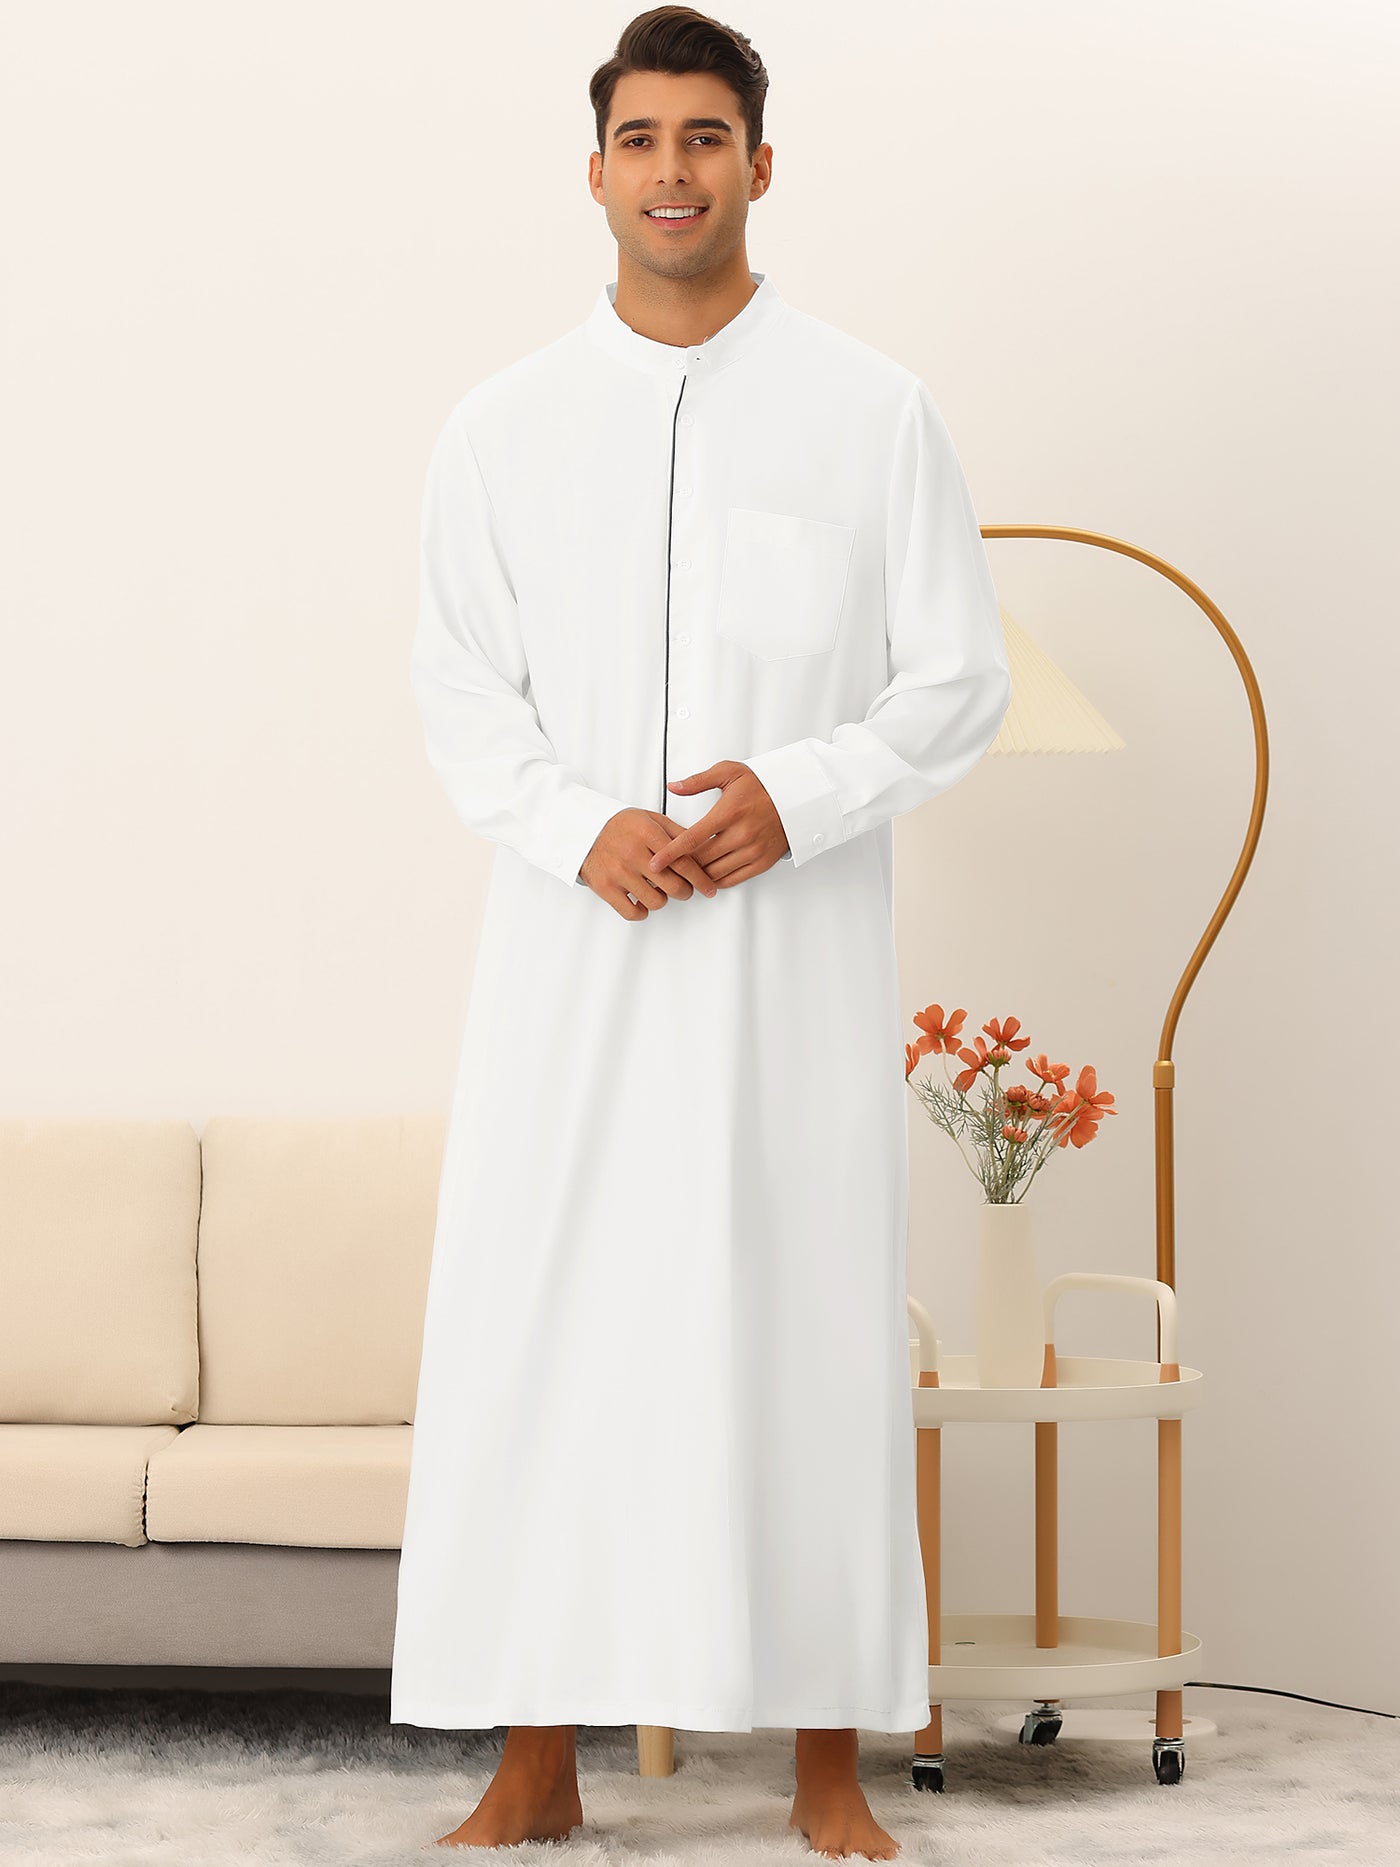 Bublédon Stand Collar Nightshirt for Men's Button Closure Long Sleeves Nightgown Sleep Shirt